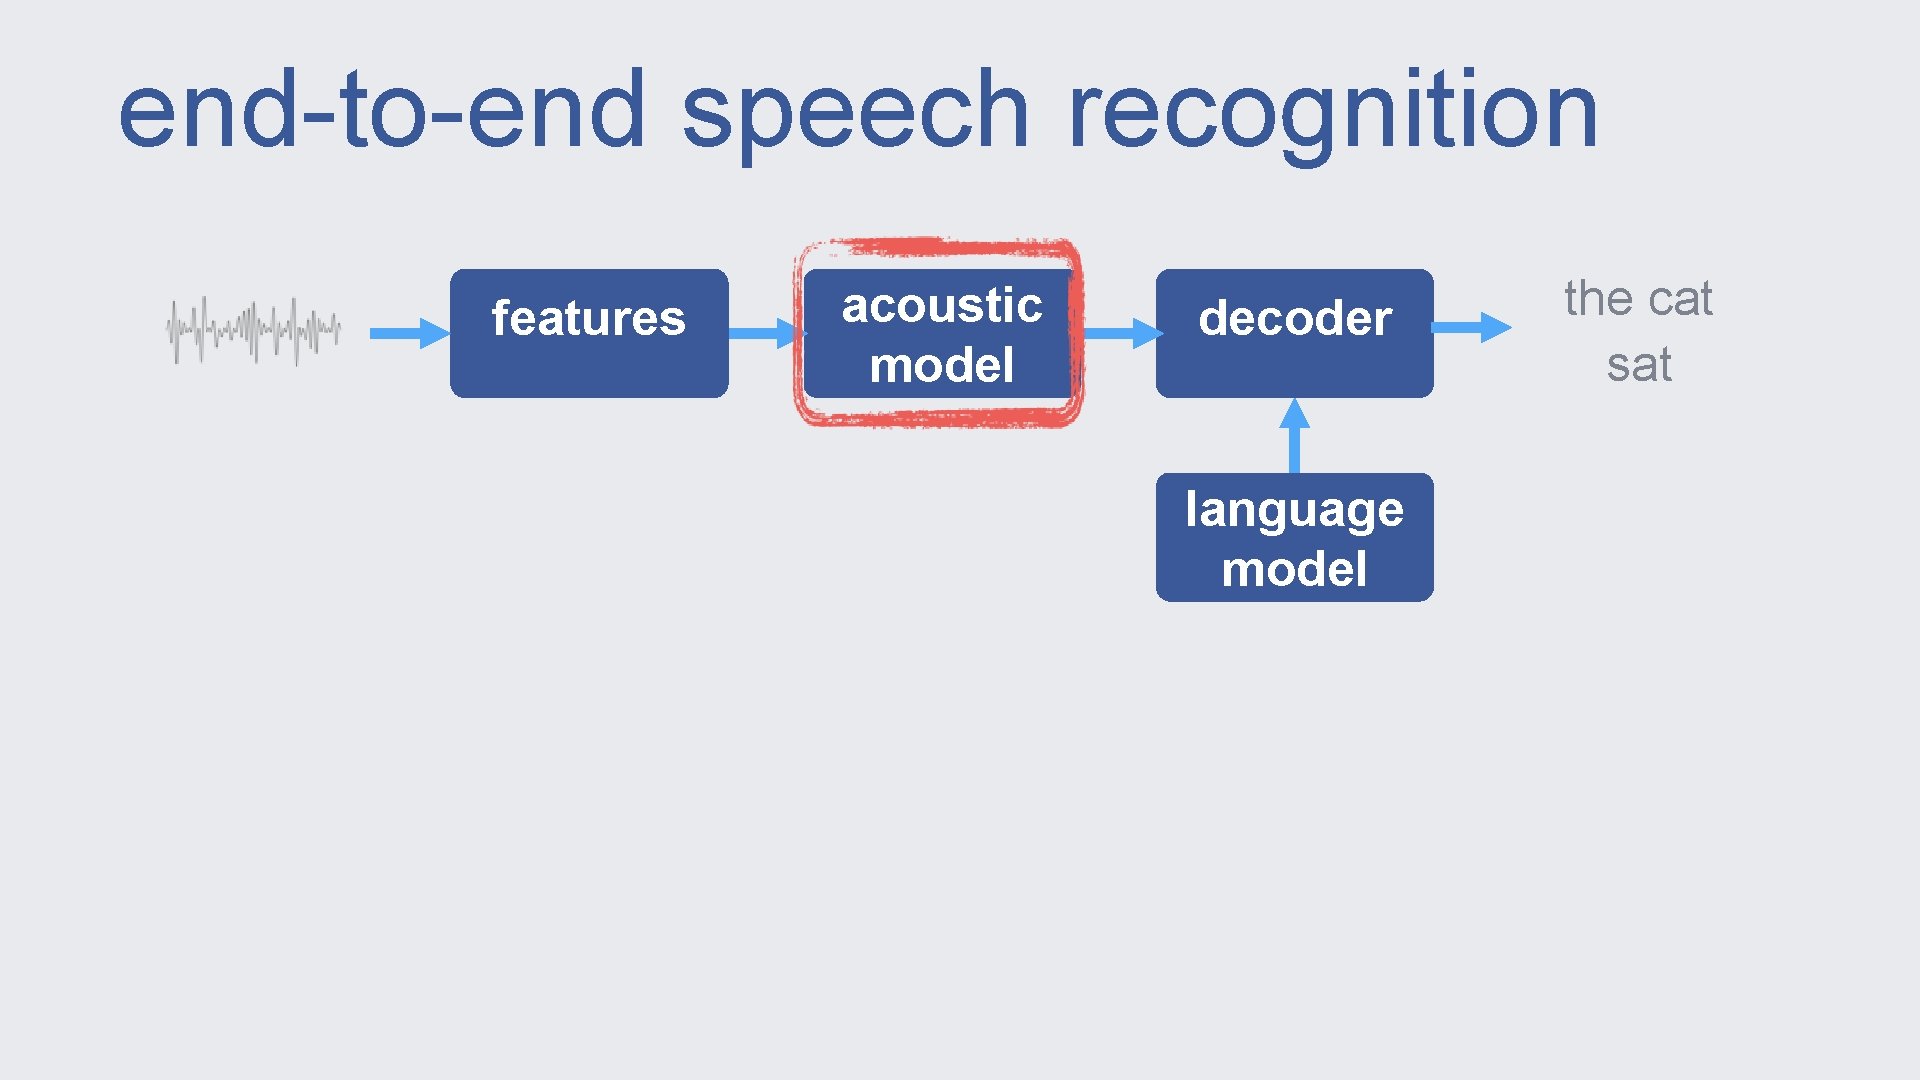 end-to-end speech recognition features acoustic model decoder language model the cat sat 